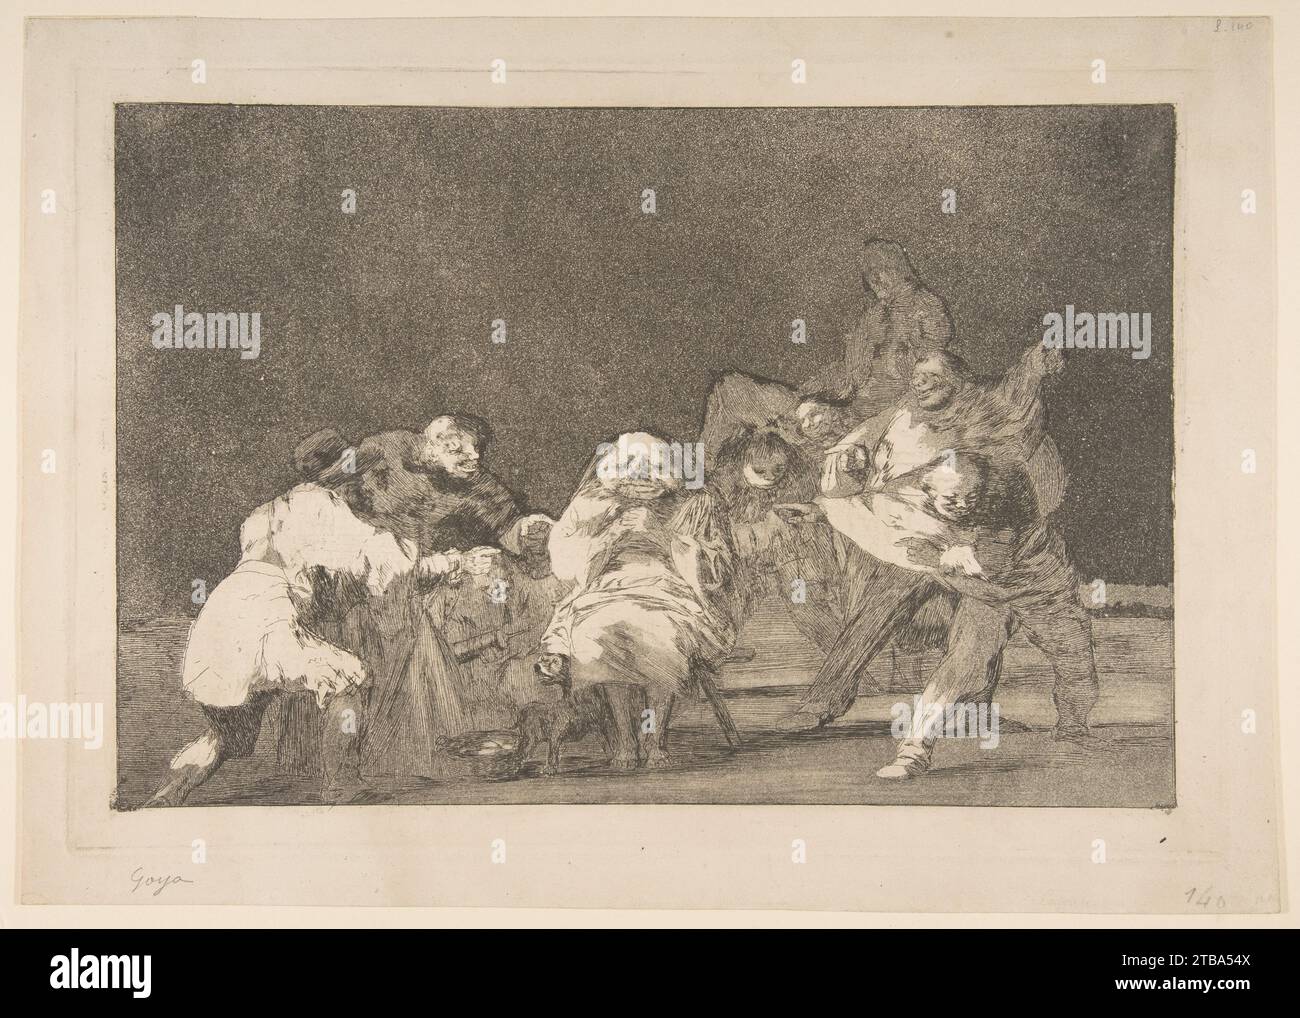 'Lealta' da 'Disparates' (Follies / Irrationalities) 1922 di Goya (Francisco de Goya y Lucientes) Foto Stock